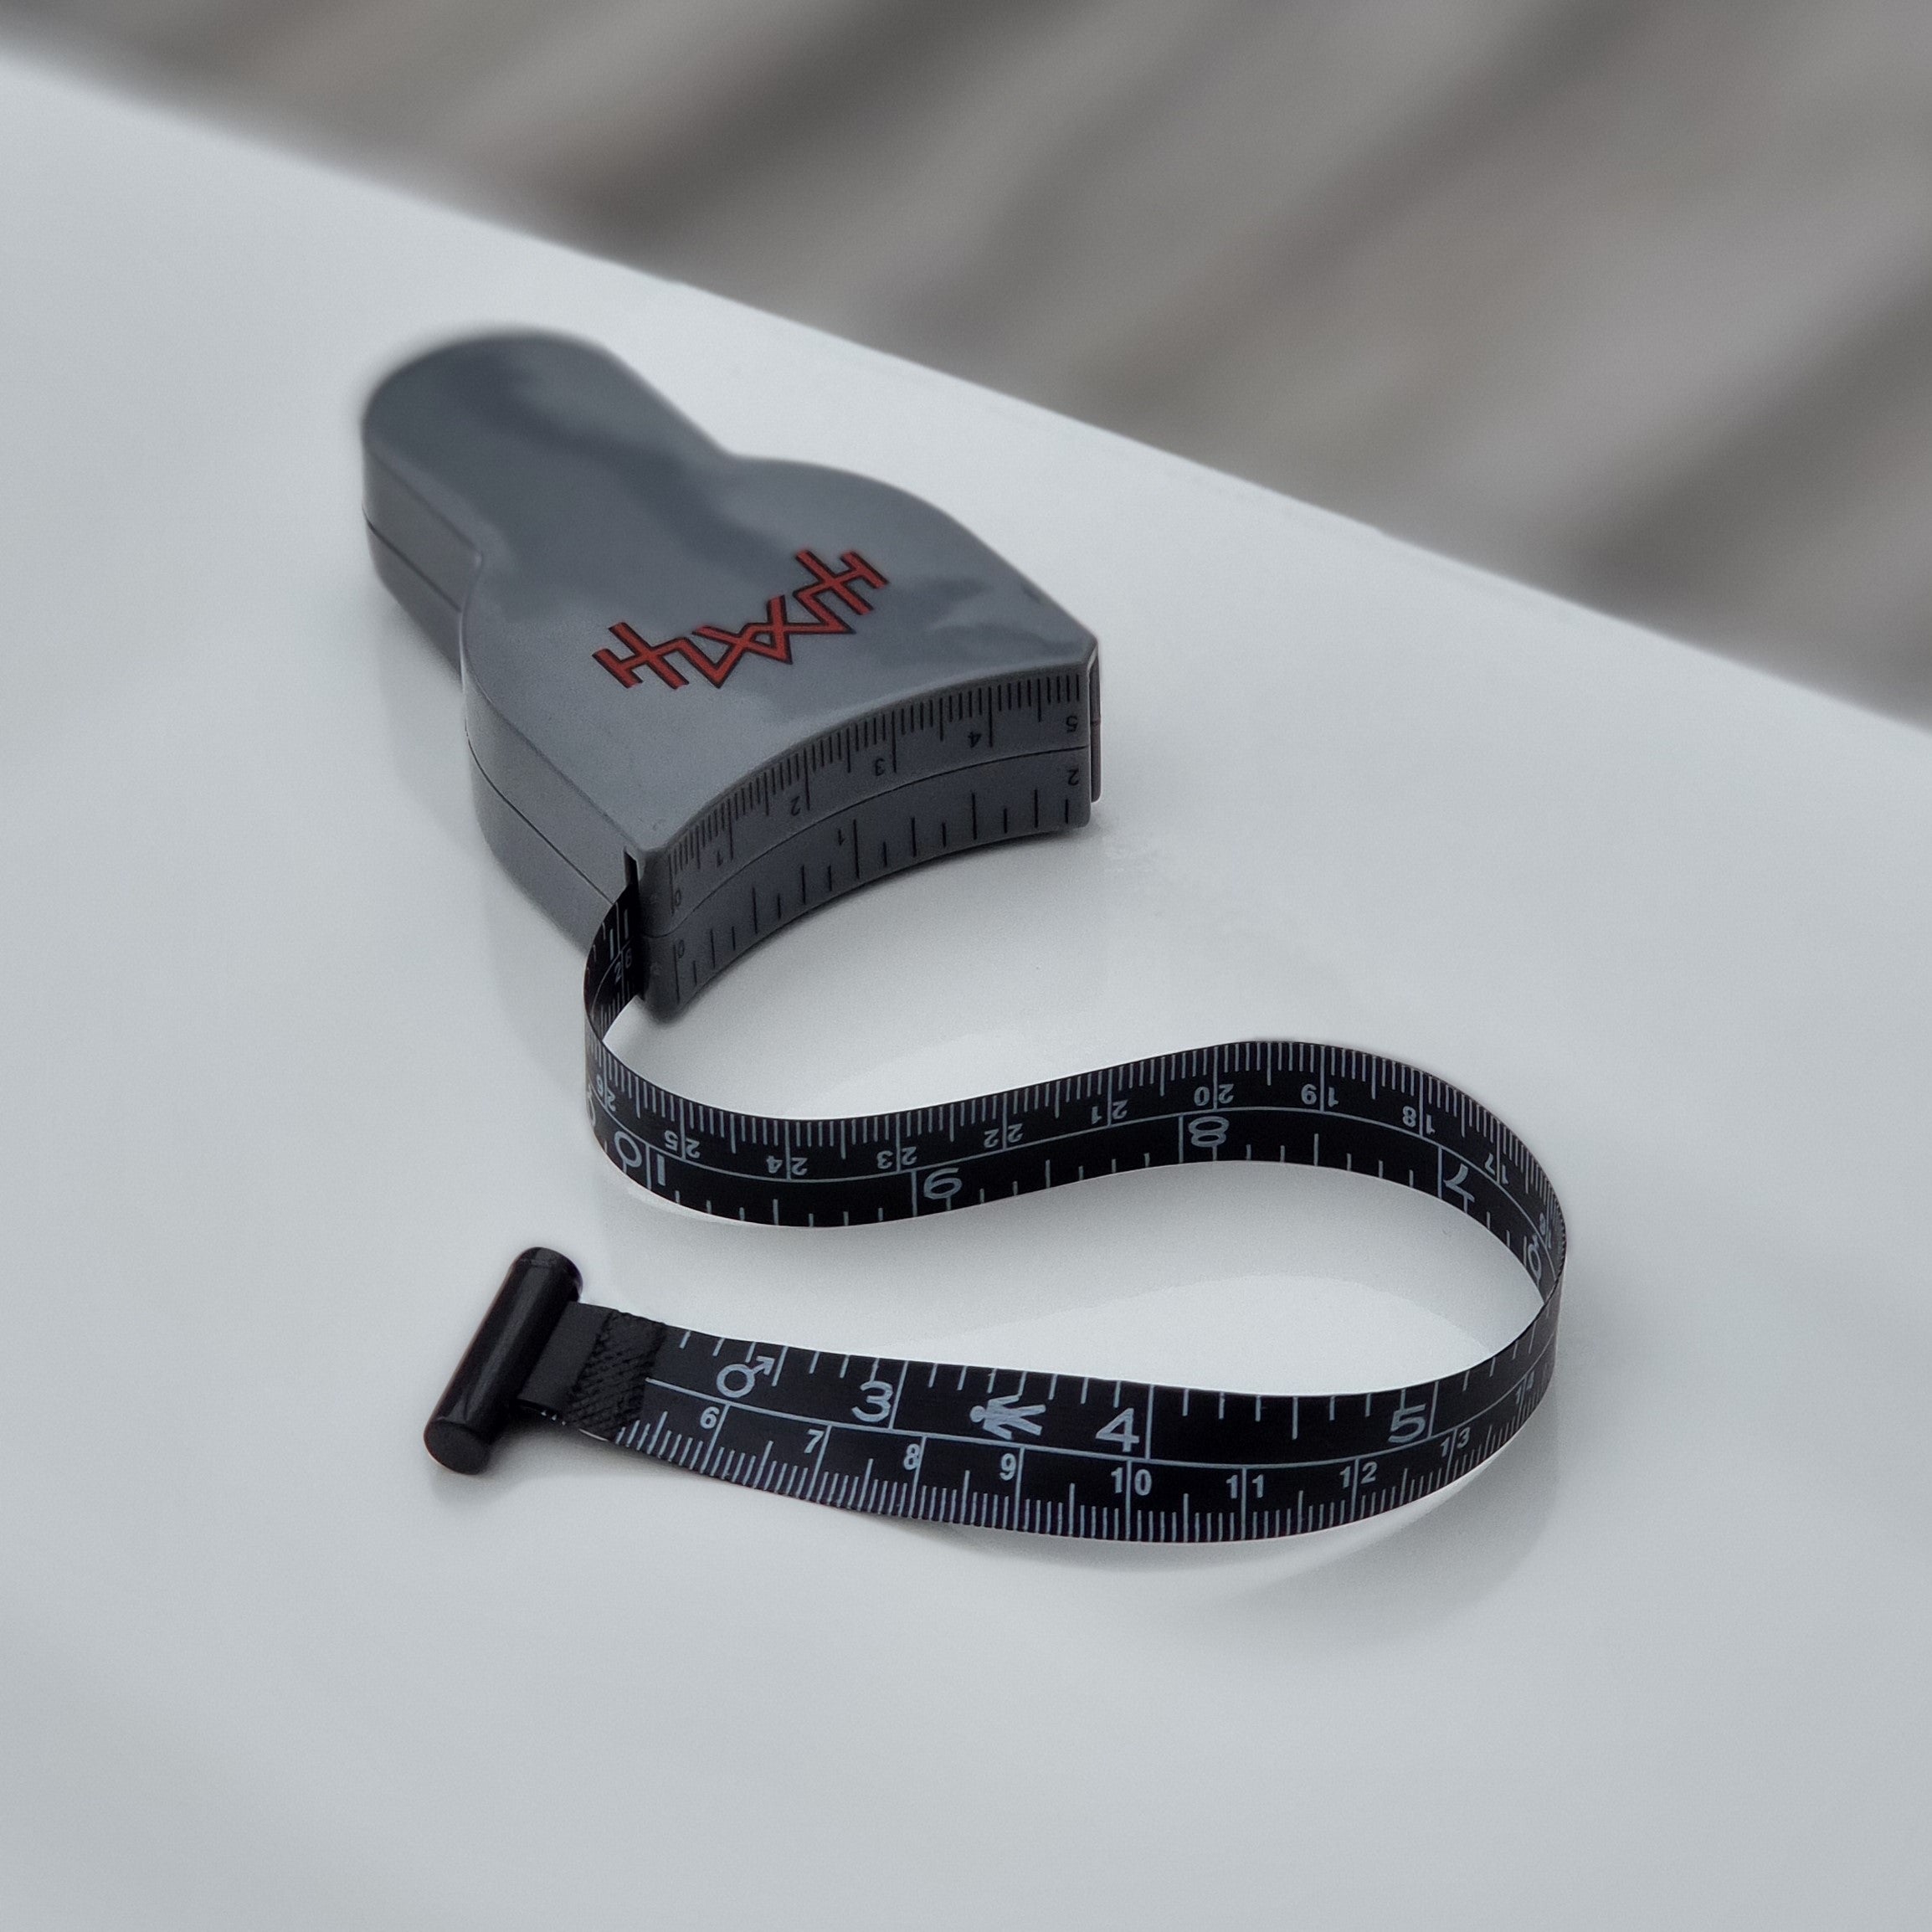 150cm Measuring Tape Body Circumference Measuring Tape Health